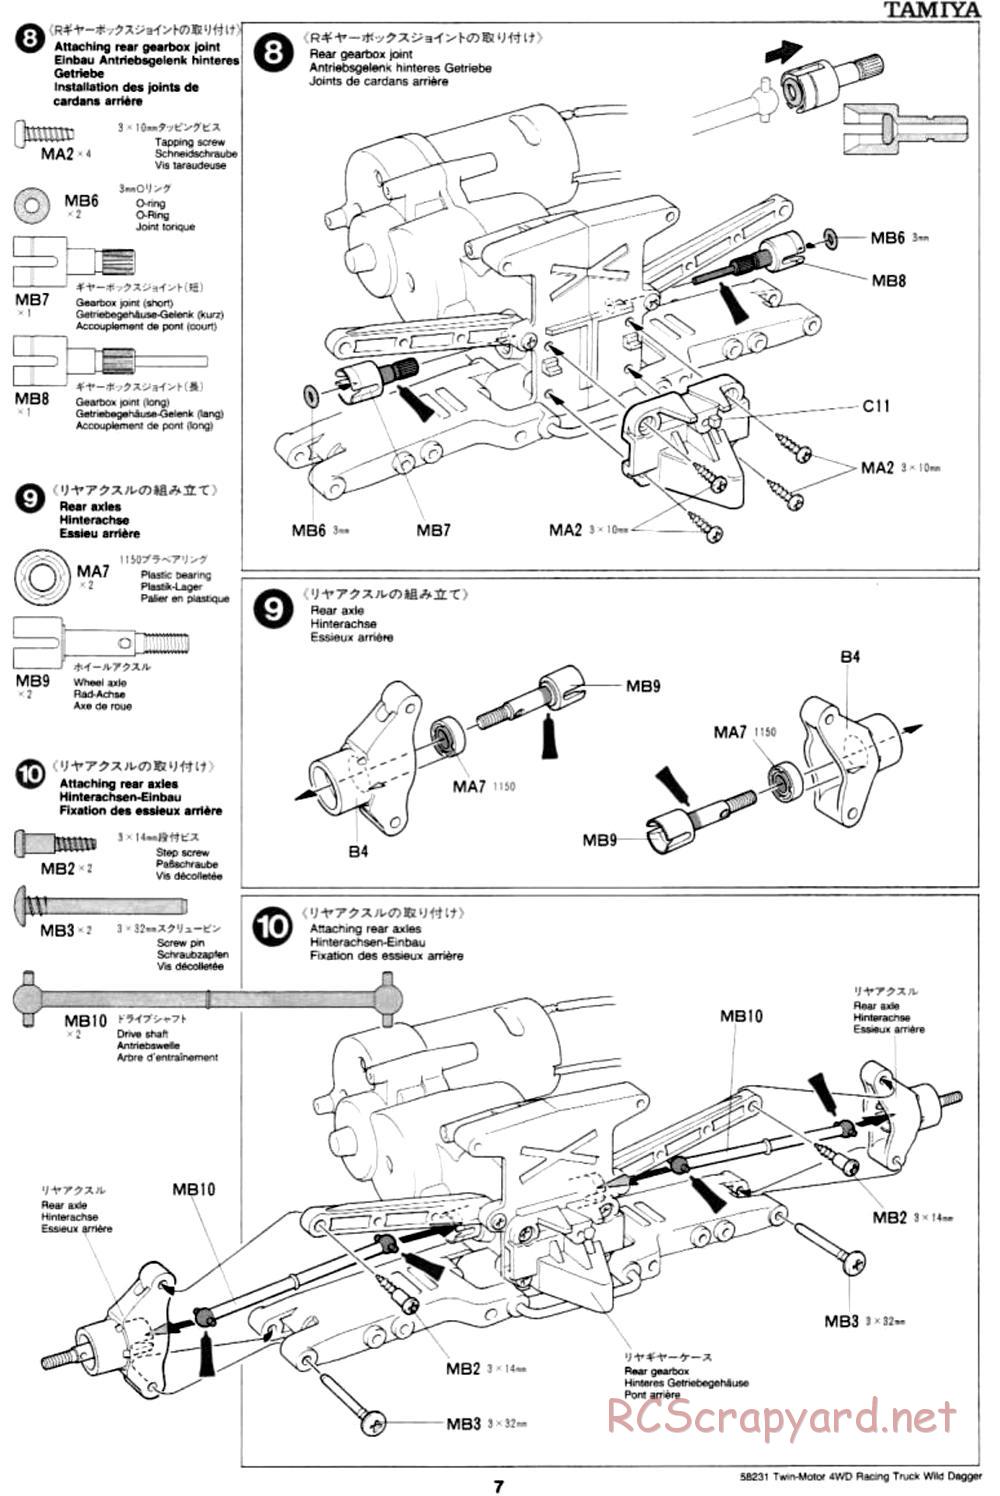 Tamiya - Wild Dagger - WR-01 Chassis - Manual - Page 7